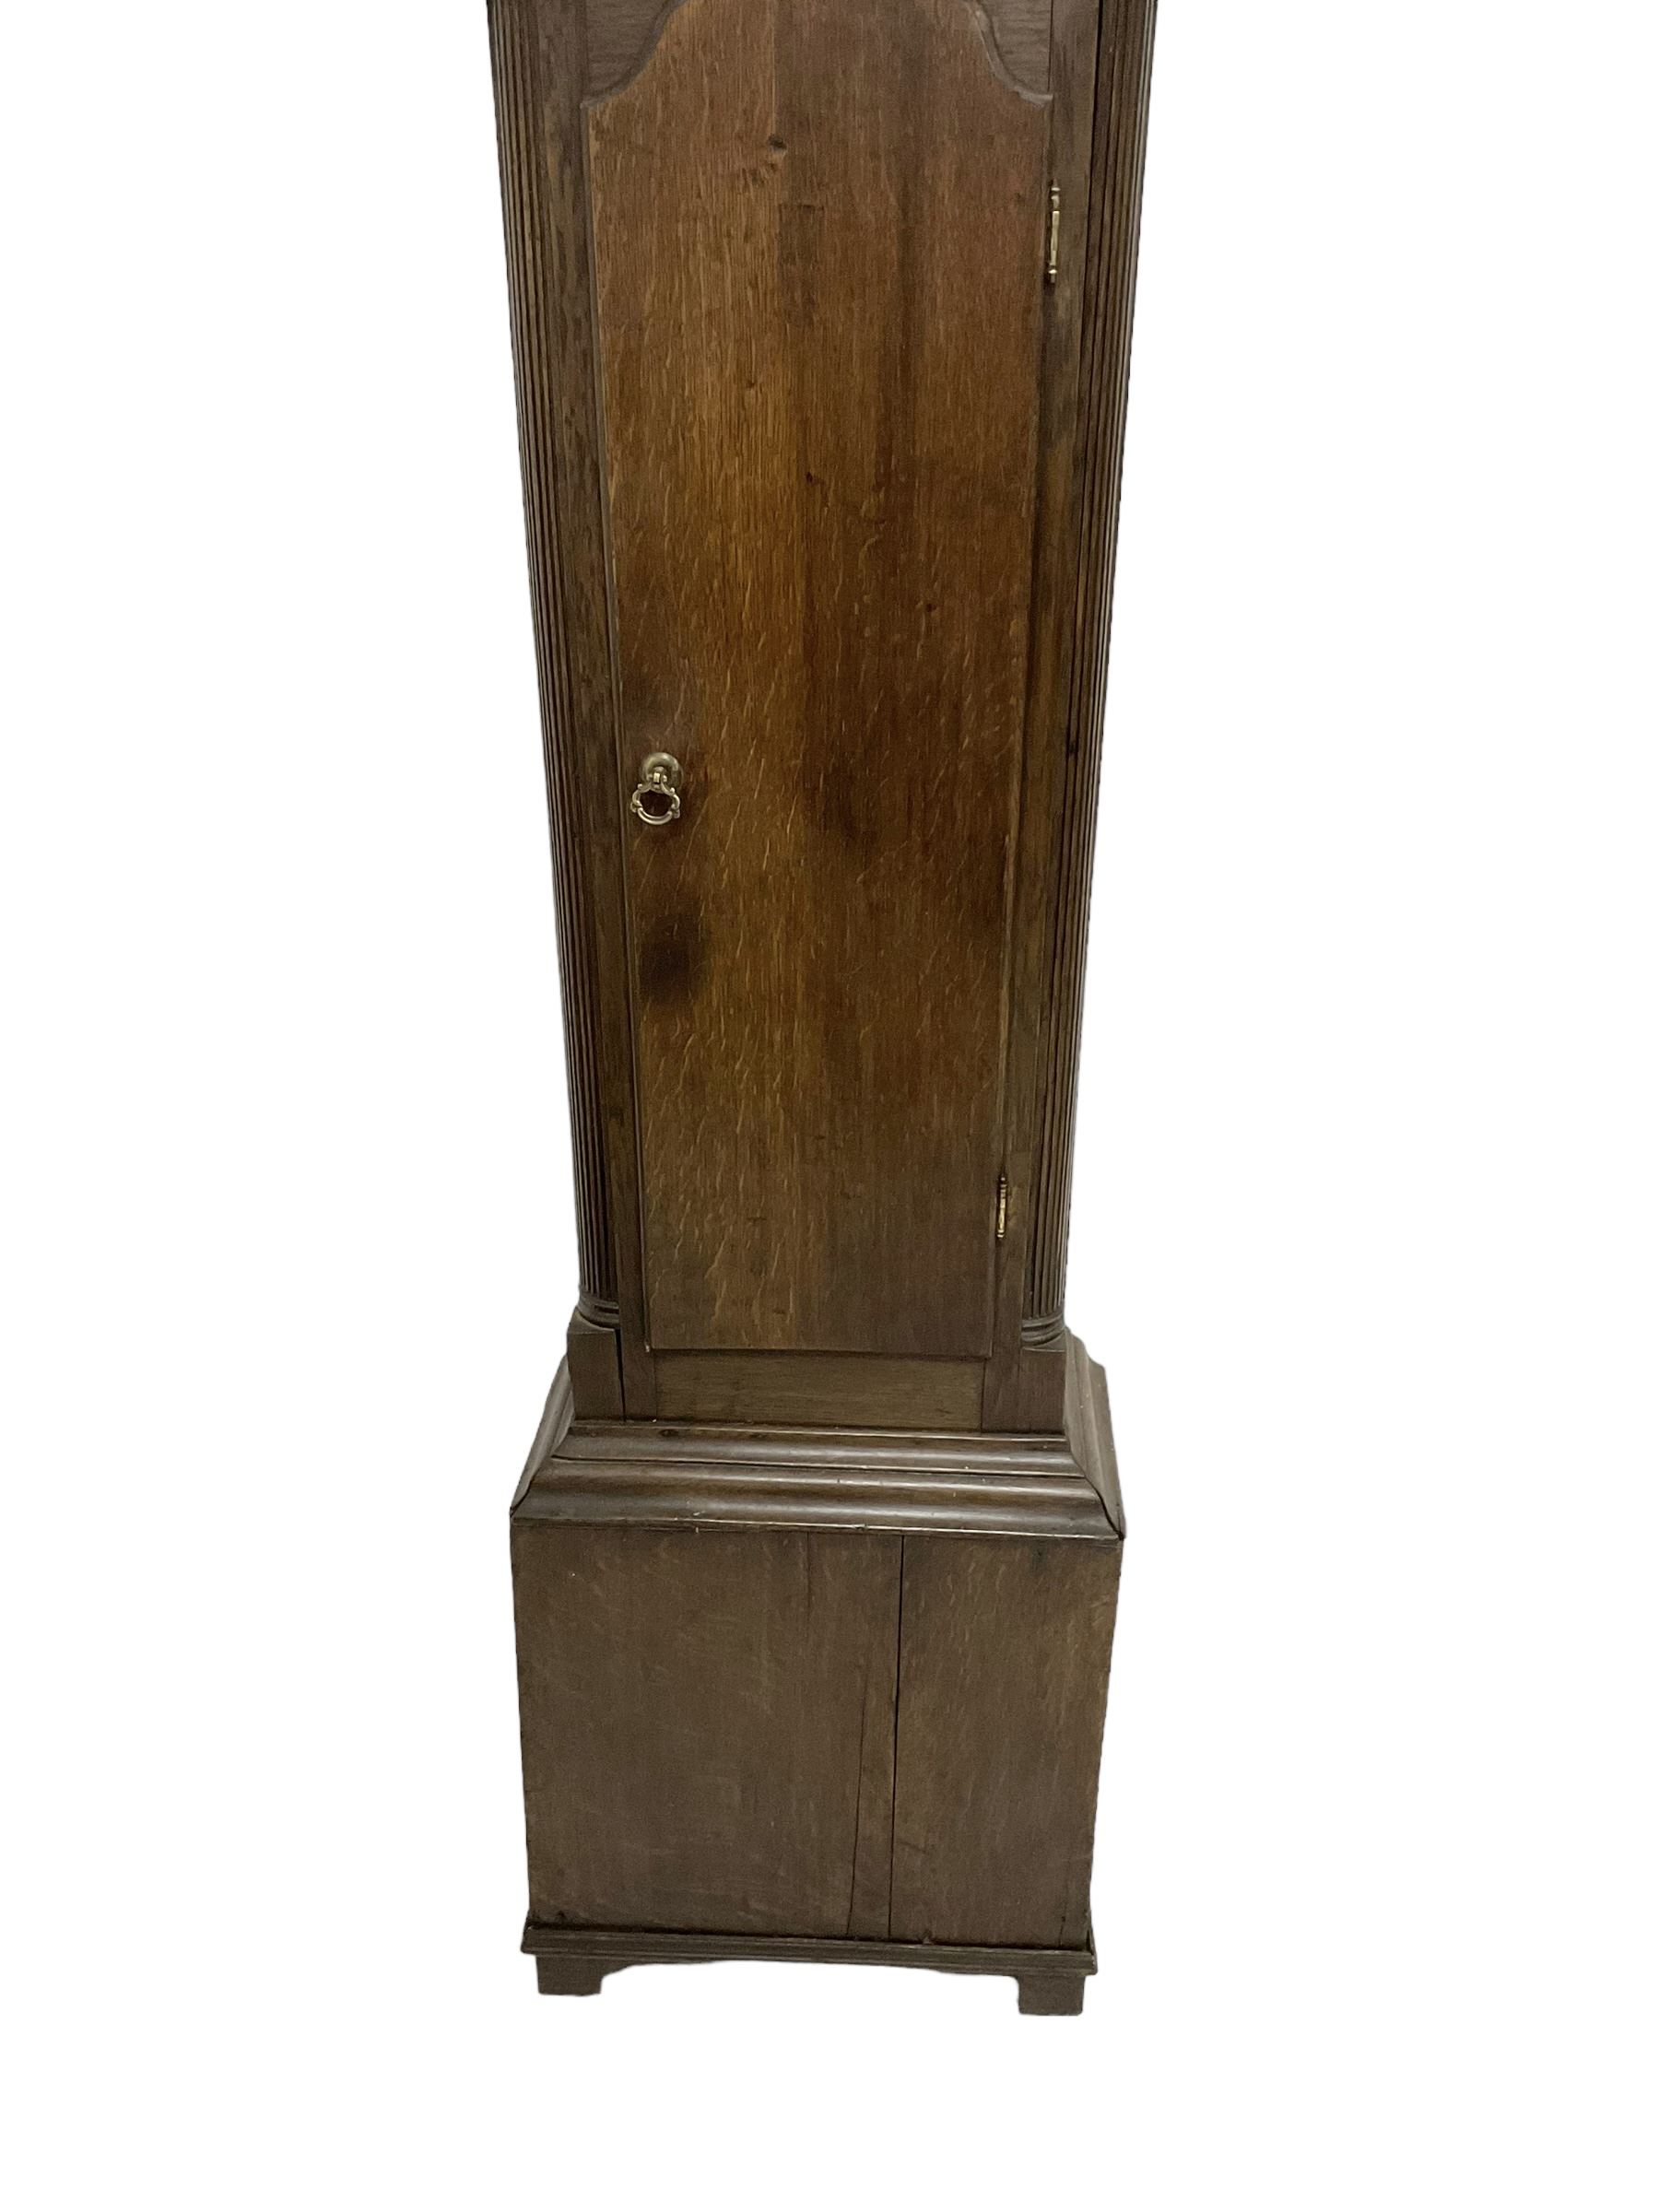 Edmund Sagar of Skipton - 18th century oak 30hr long case clock c 1790 - Image 4 of 6